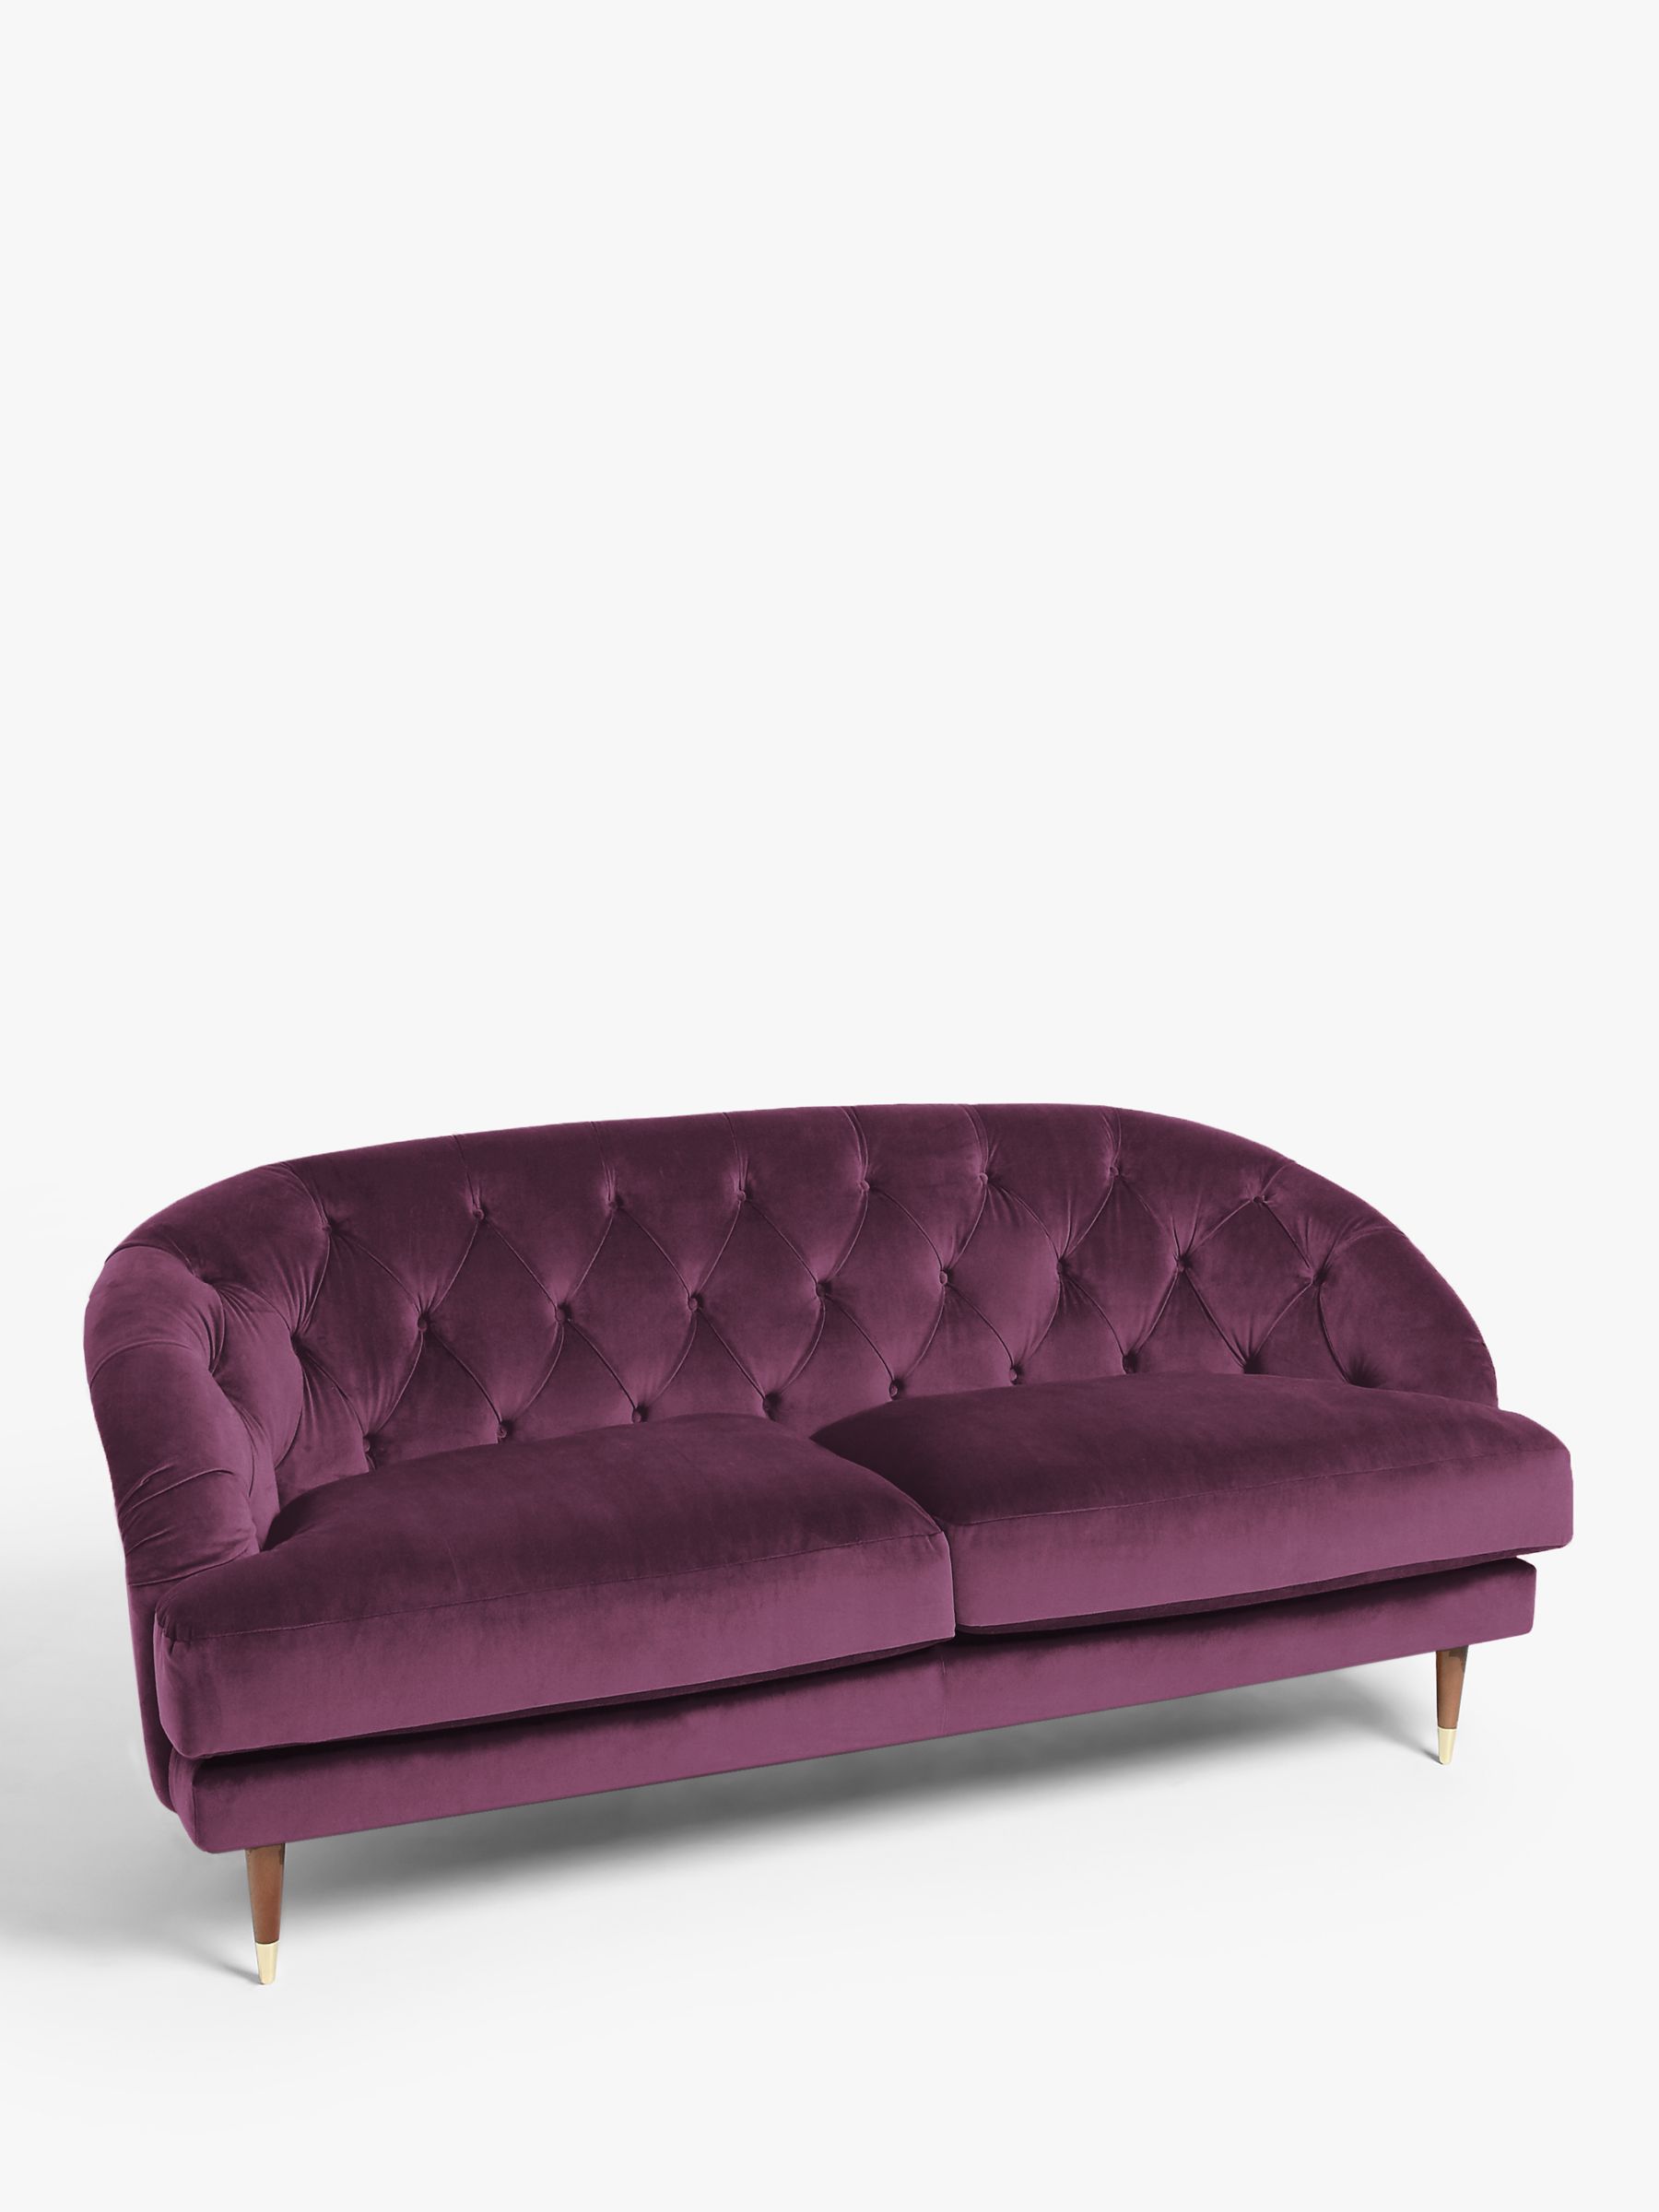 Radley Range, John Lewis + Swoon Radley Medium 2 Seater Sofa, Damson Purple Velvet